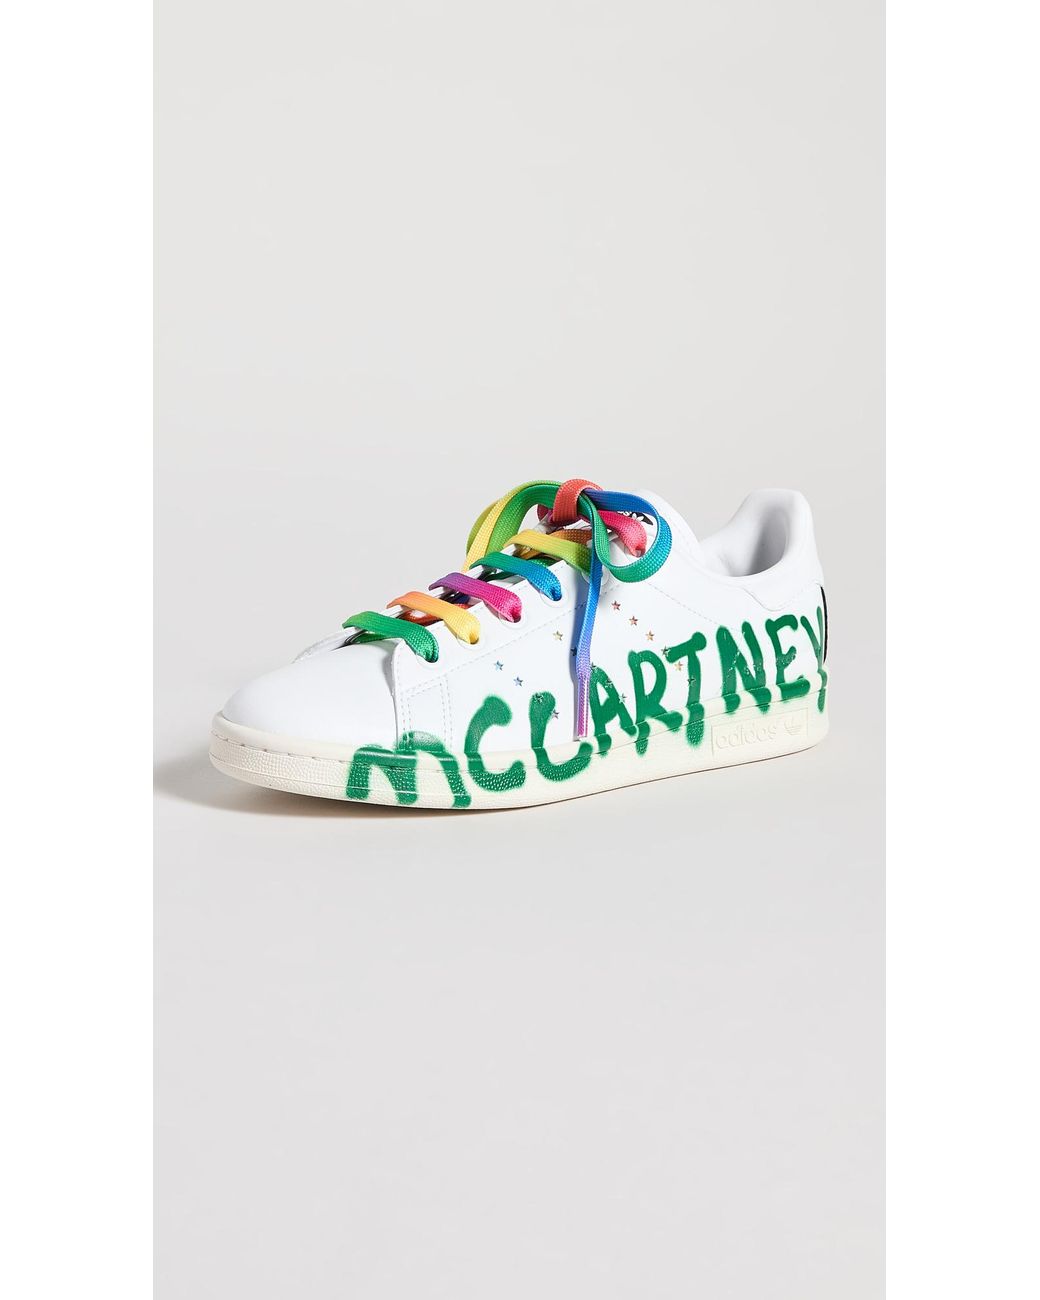 Stella McCartney X Adidas Stan Smith Sneakers | Lyst